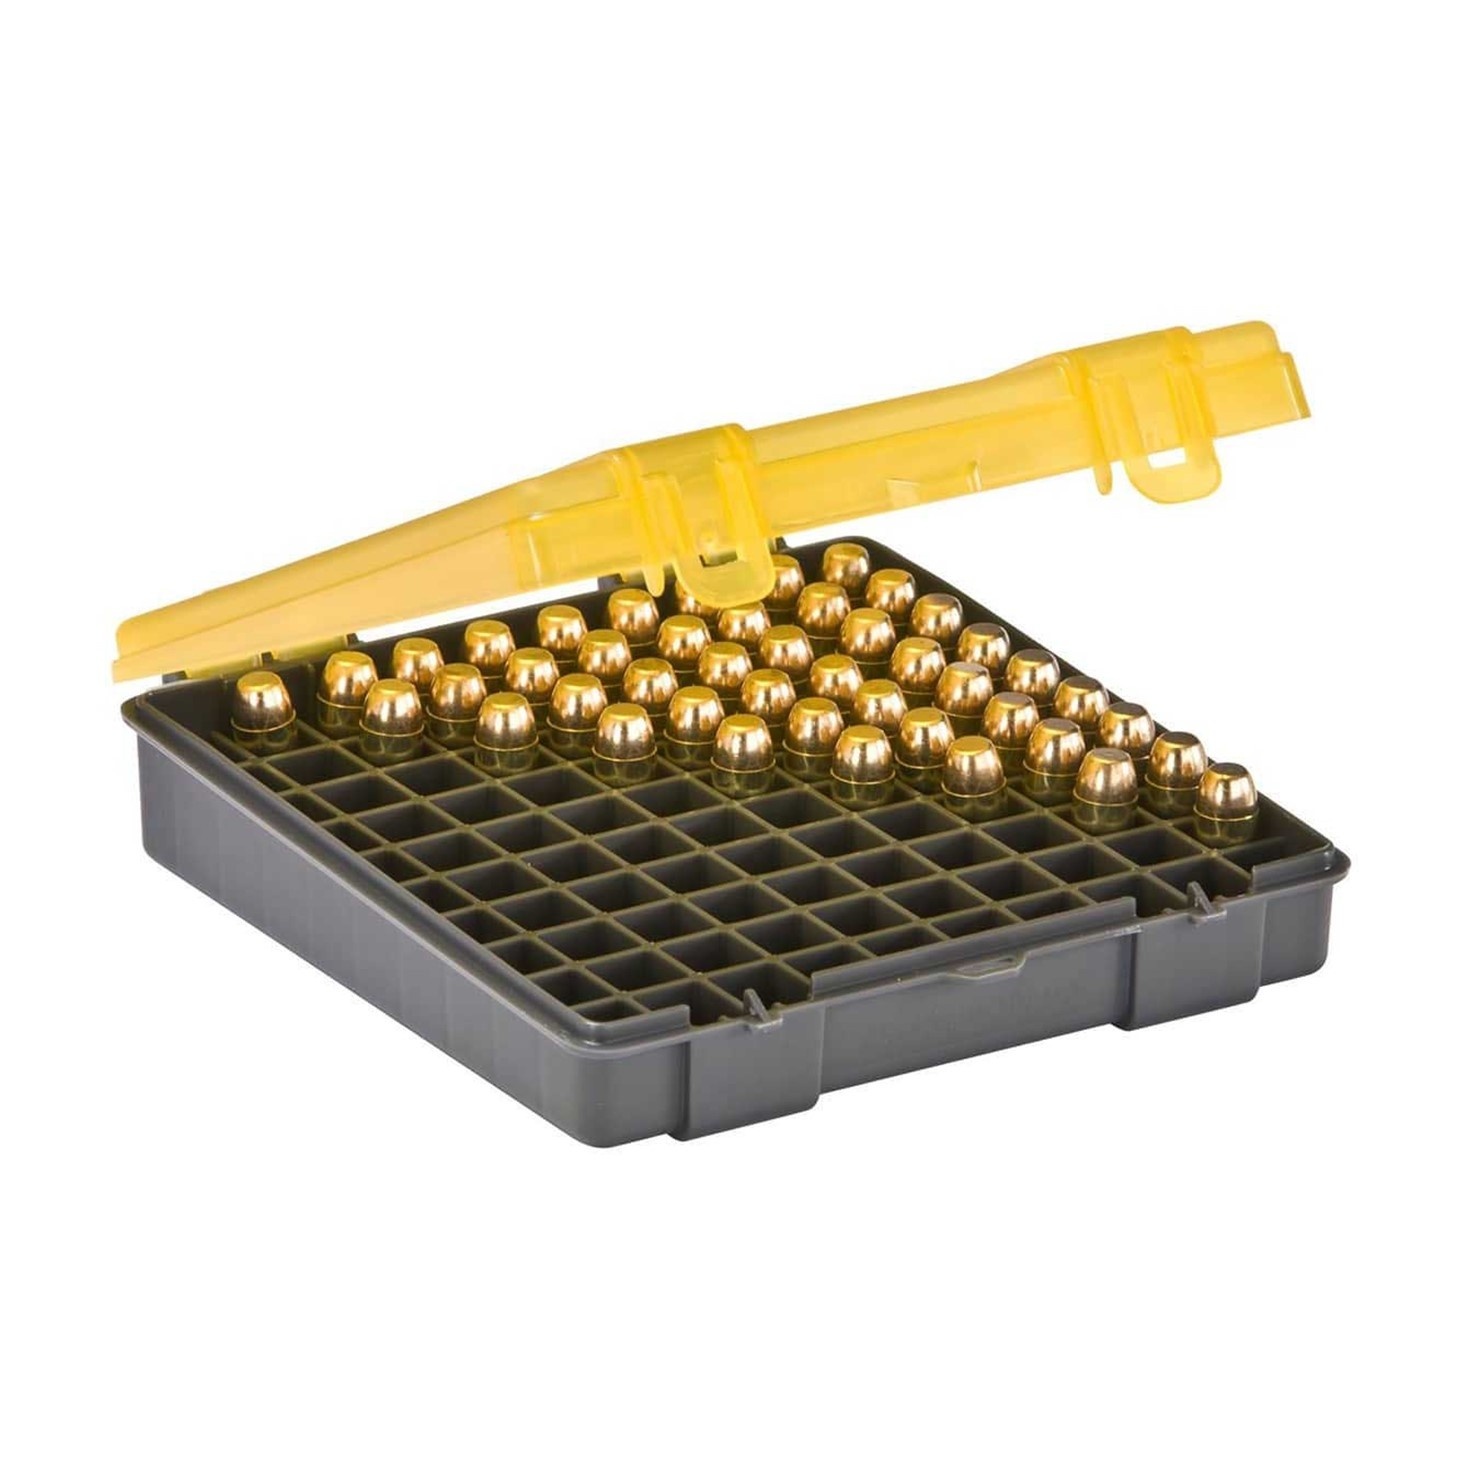 Plano Shell Case 100-Count Handgun Ammo - 45ACP 40SW or 10mm Auto